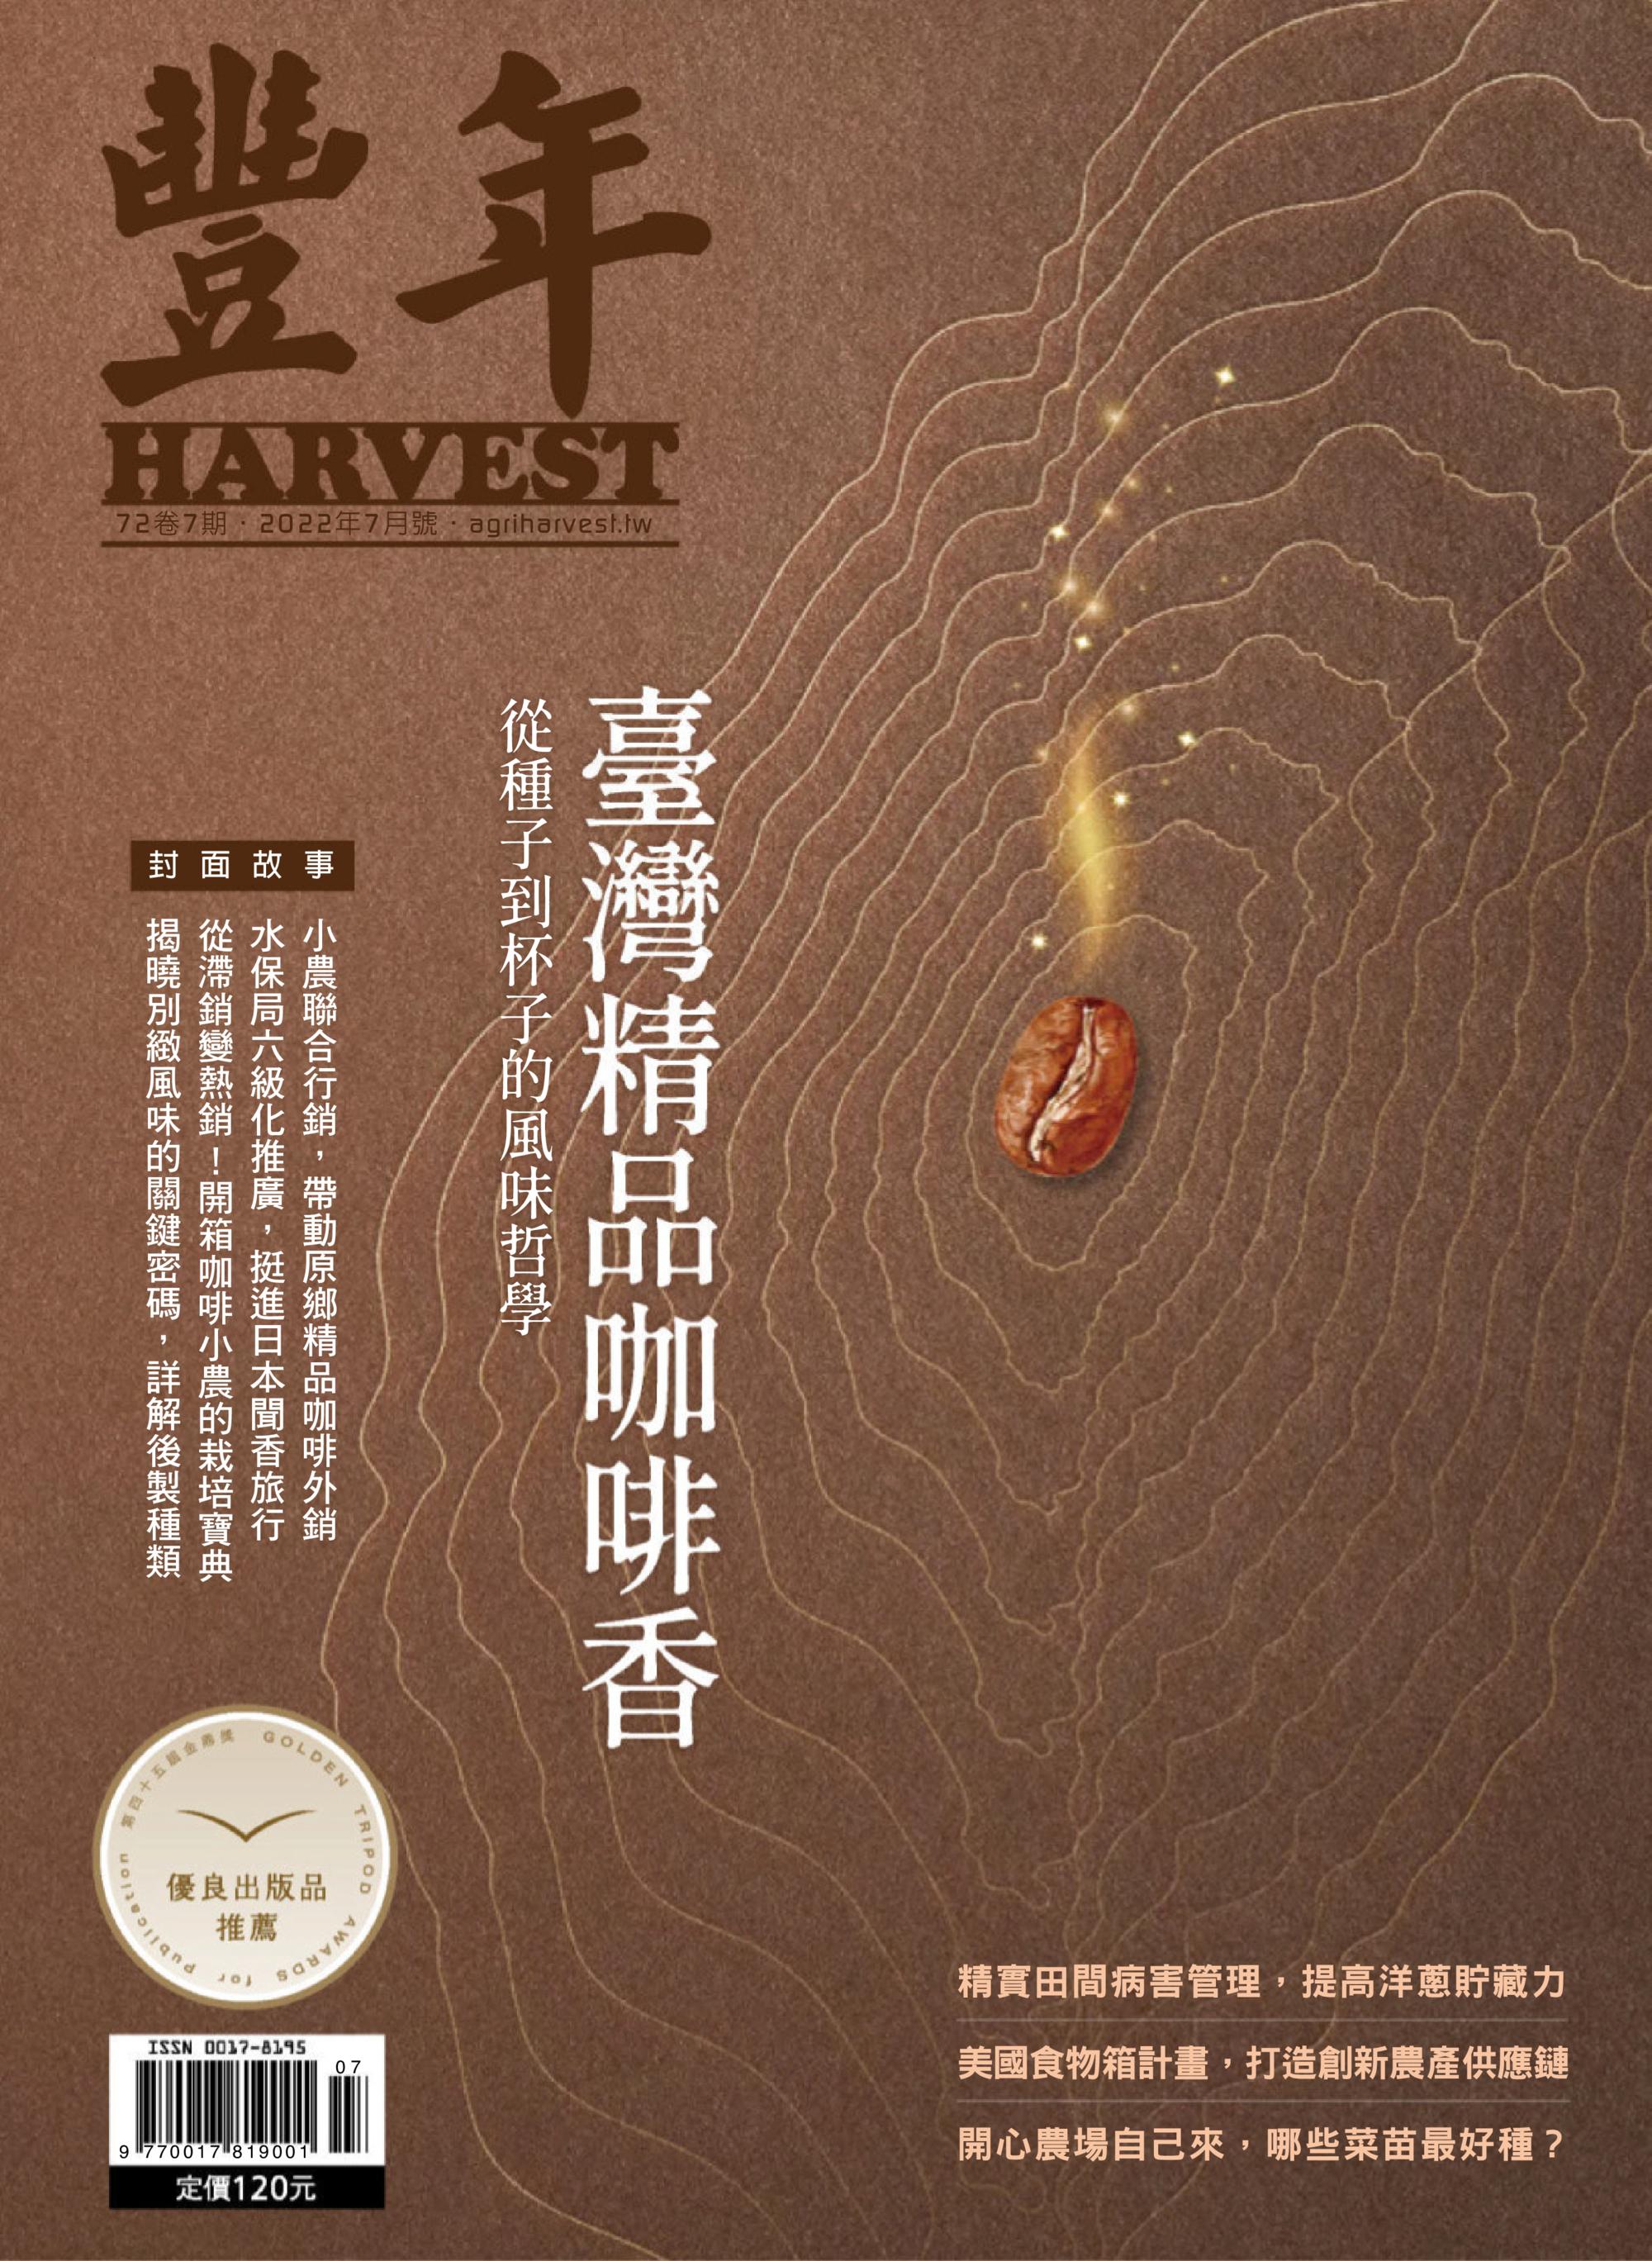 Harvest 豐年雜誌 - 七月 2022